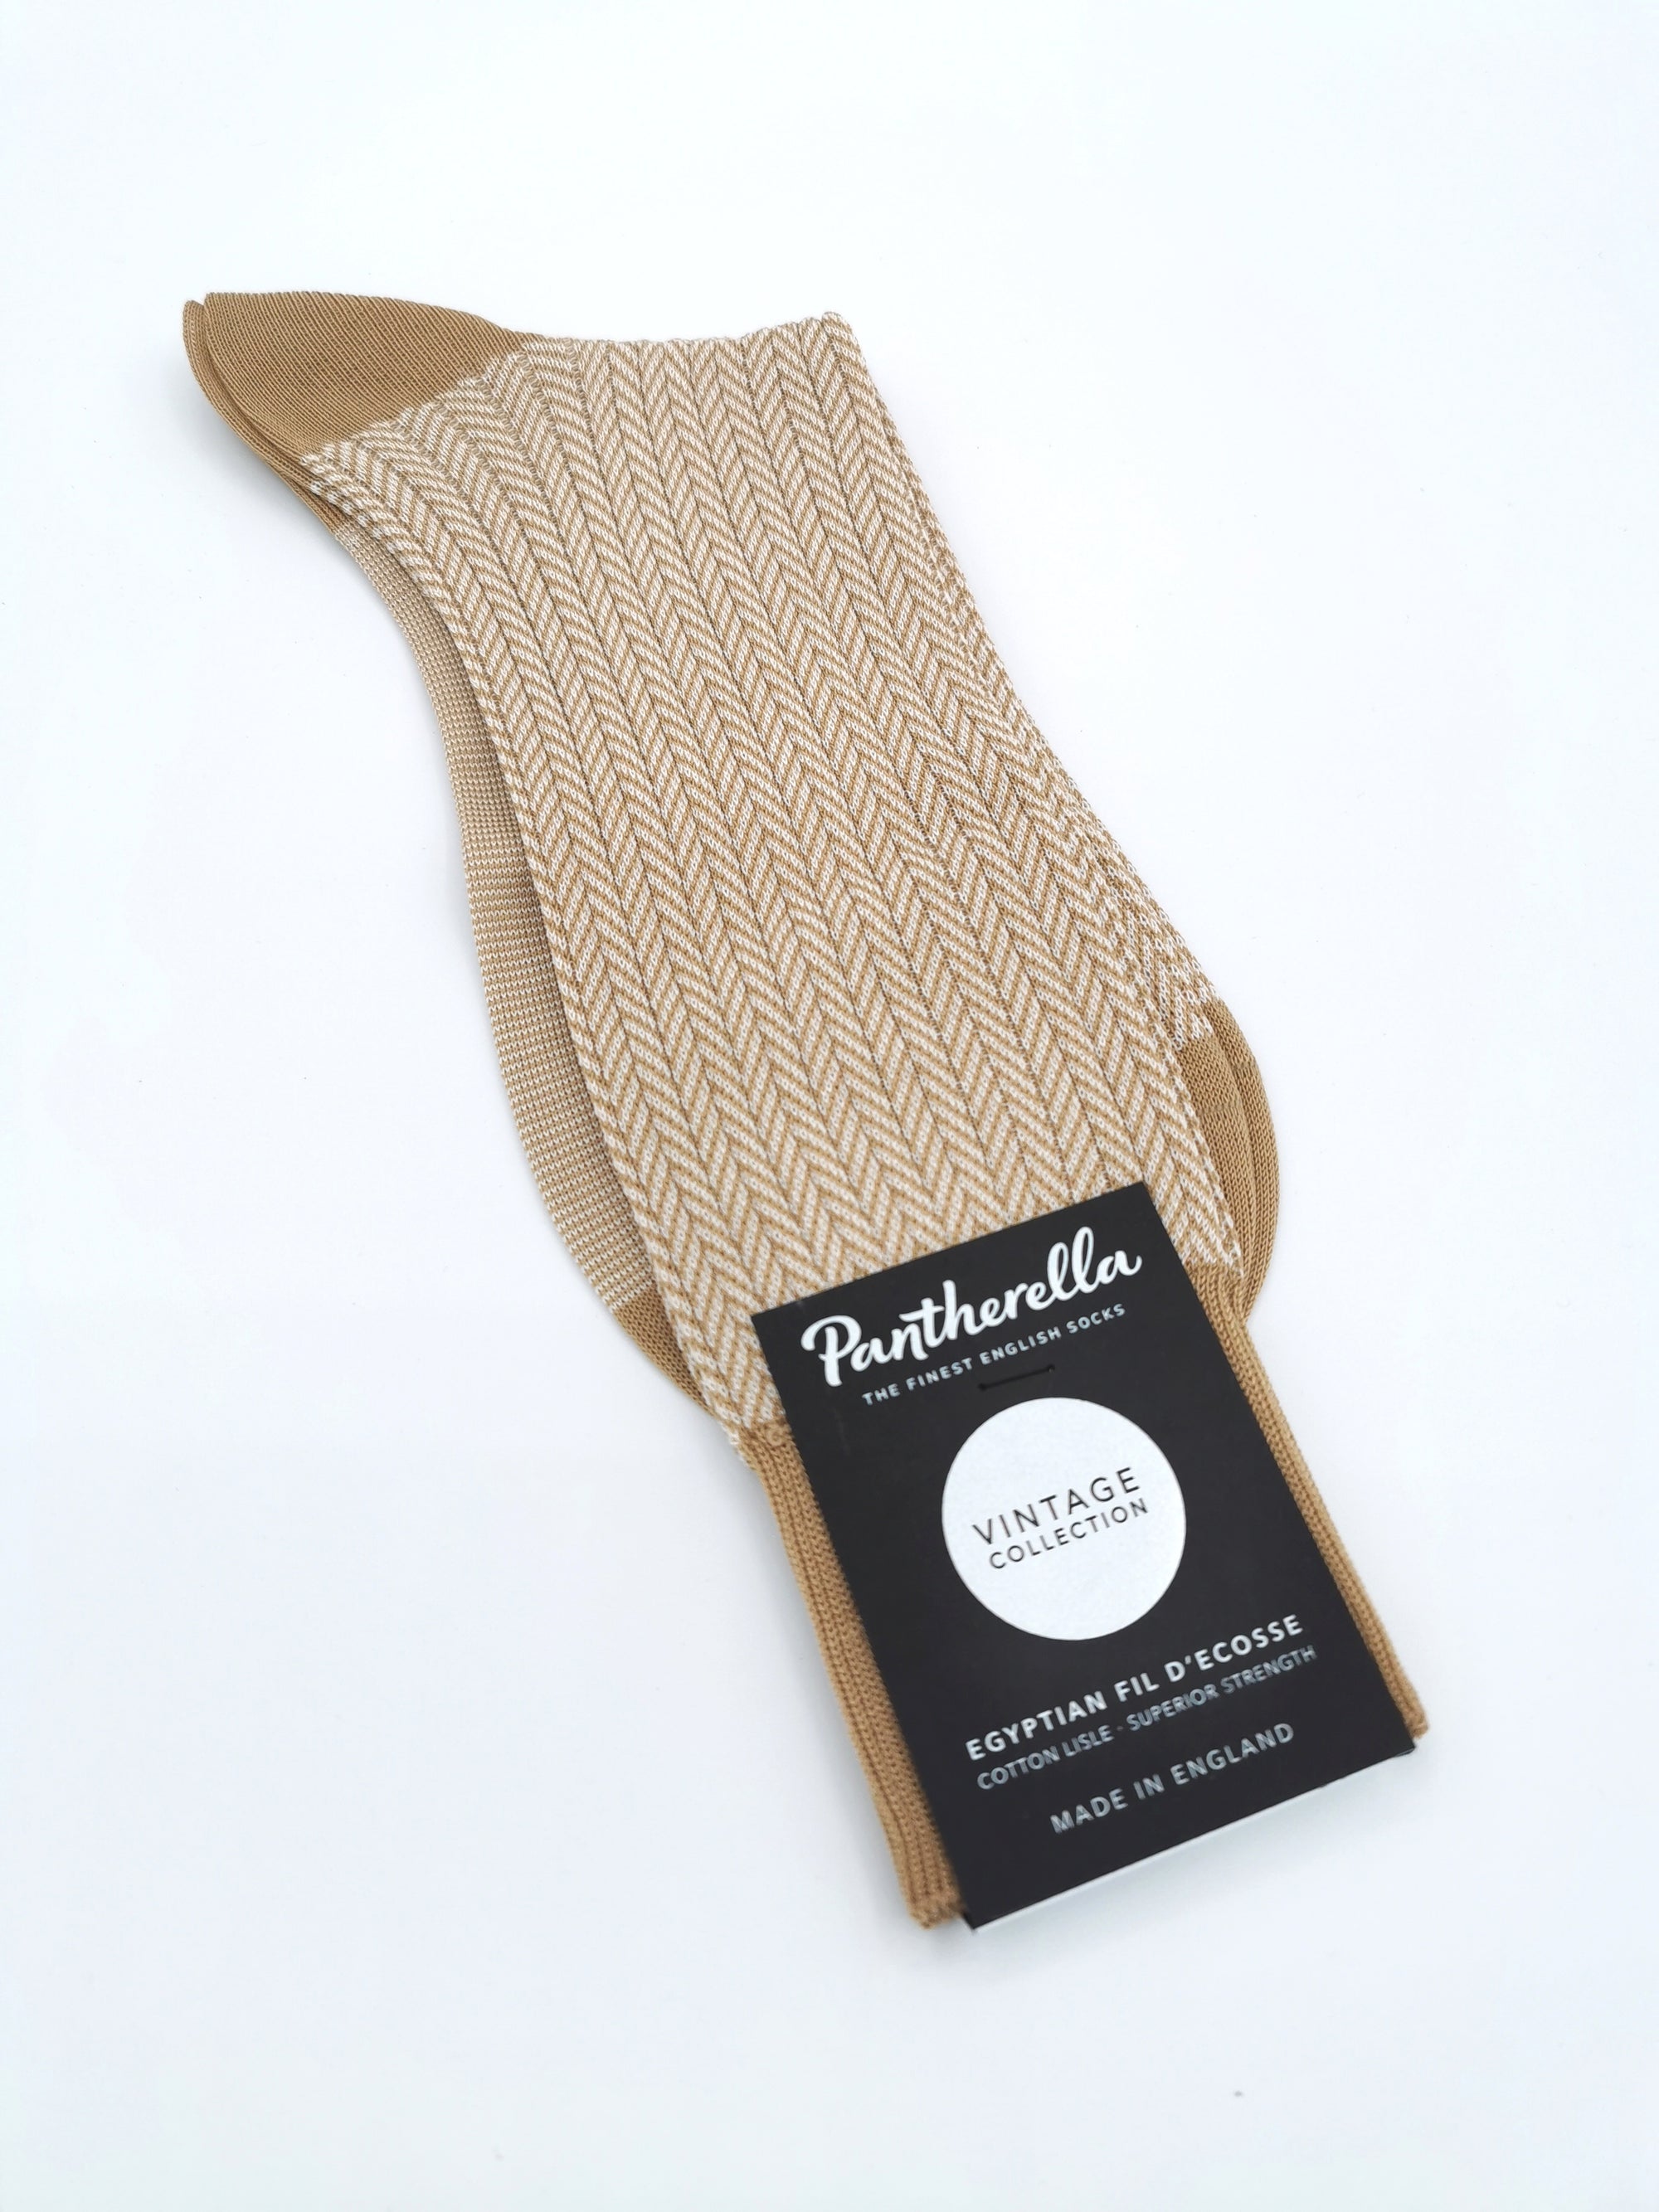 Pantherella herringbone pattern socks